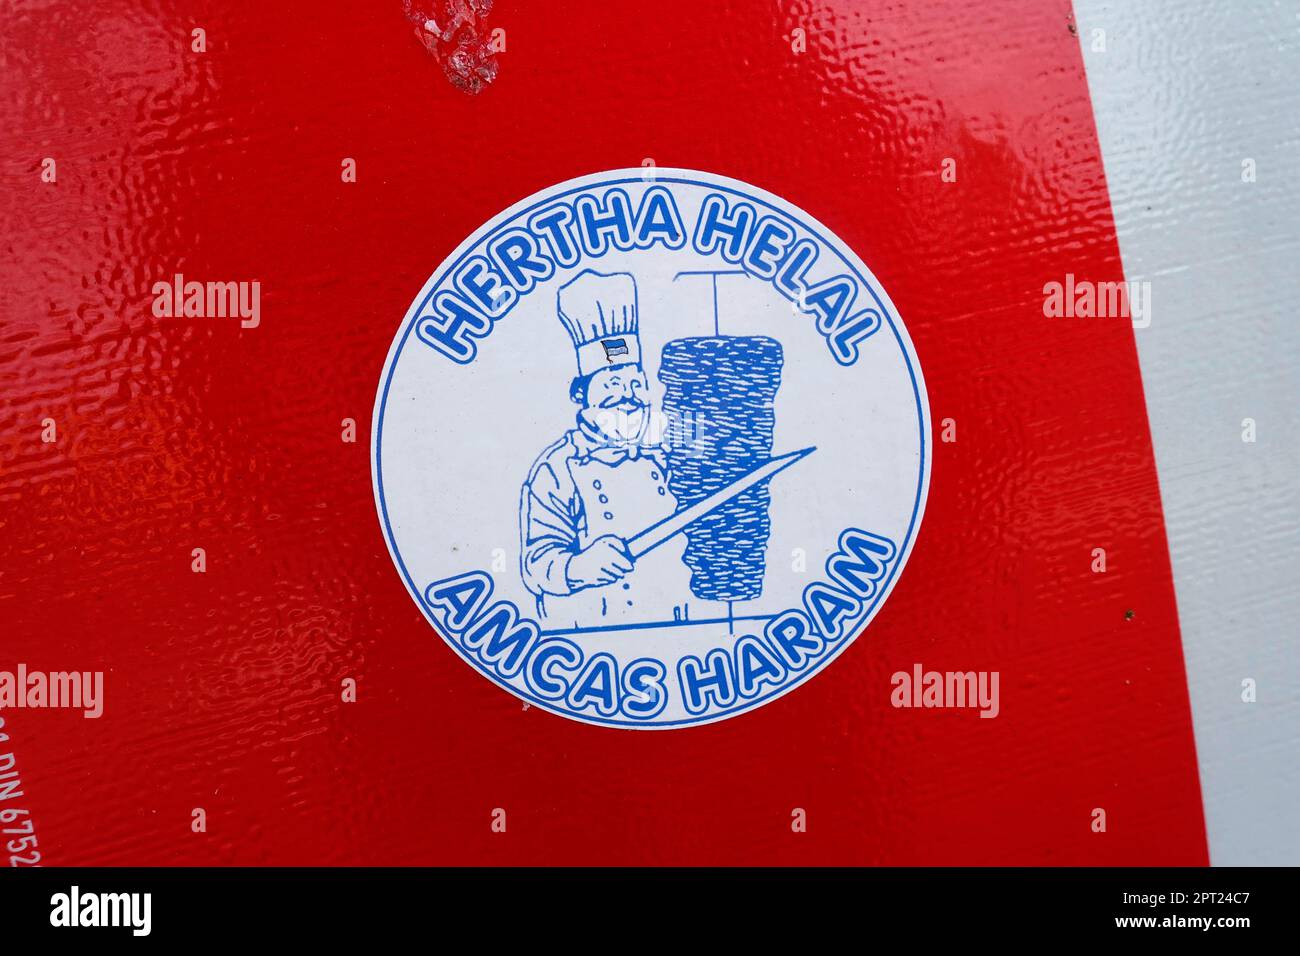 Sticker, Hertha Helal, Amcas Haram, terrain public, Berlin, Allemagne Banque D'Images